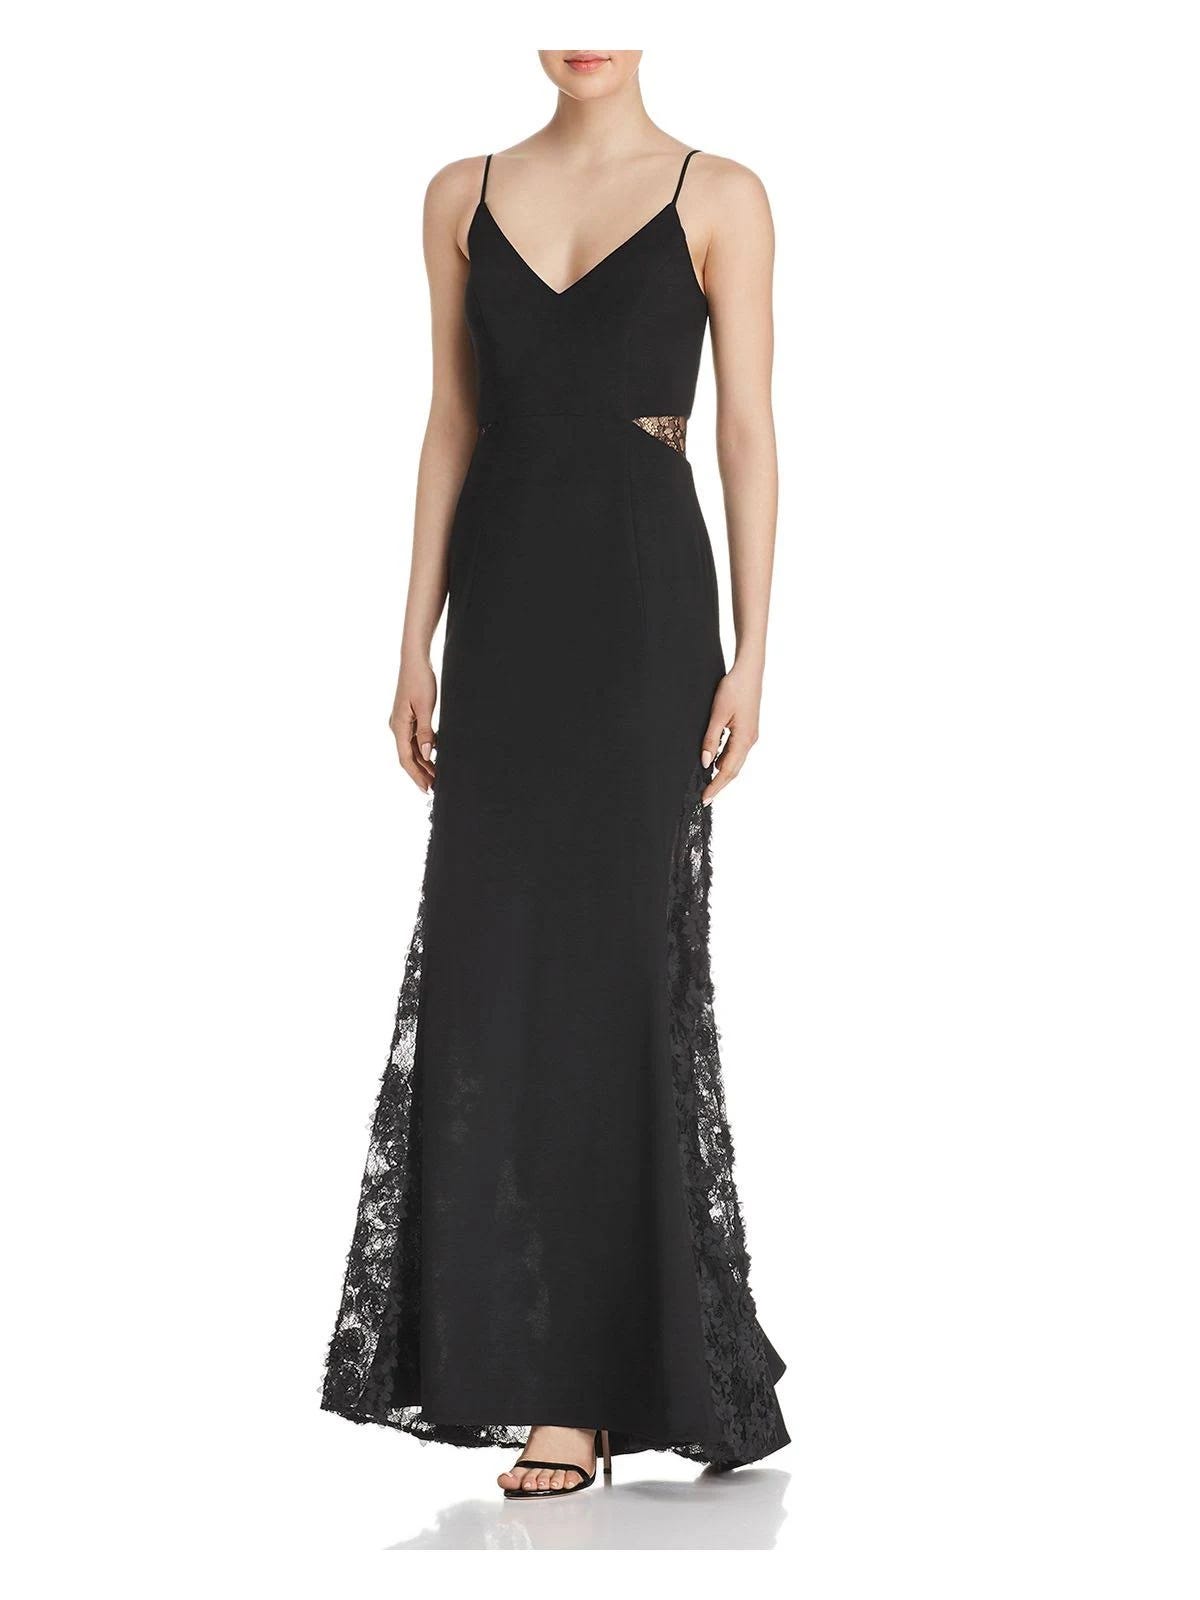 Stylish Black Spaghetti Strap Fit and Flare Evening Dress | Image